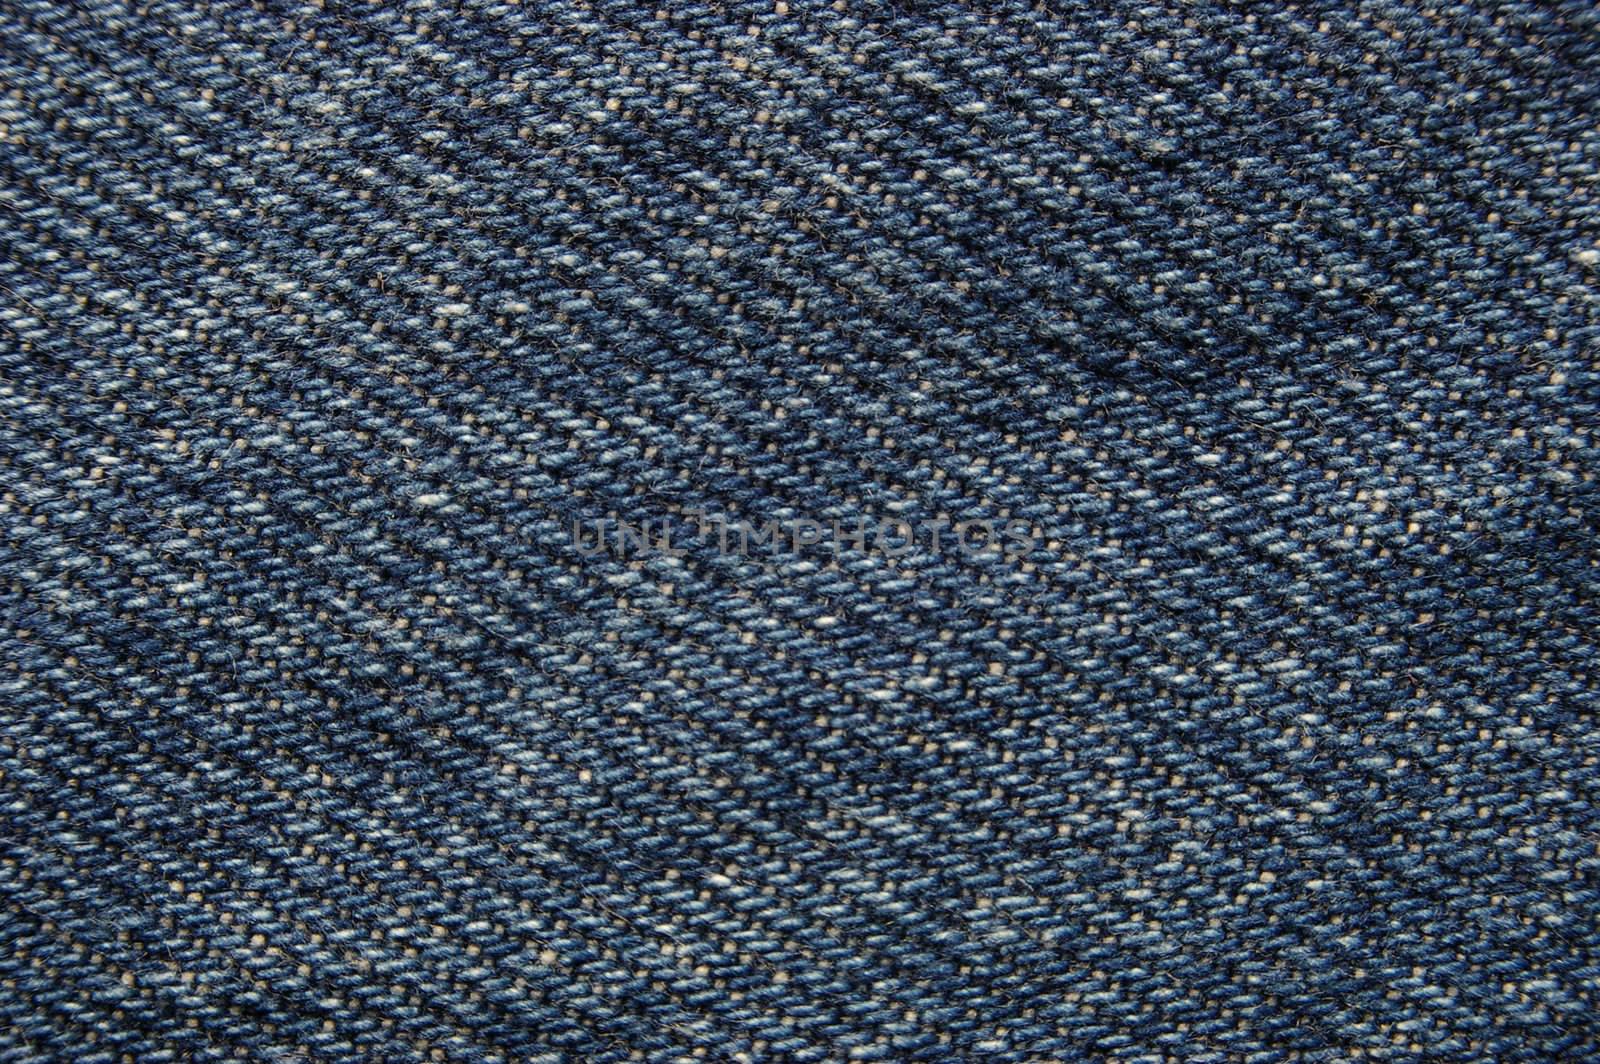 Jean or Denim Fabric by thomasw